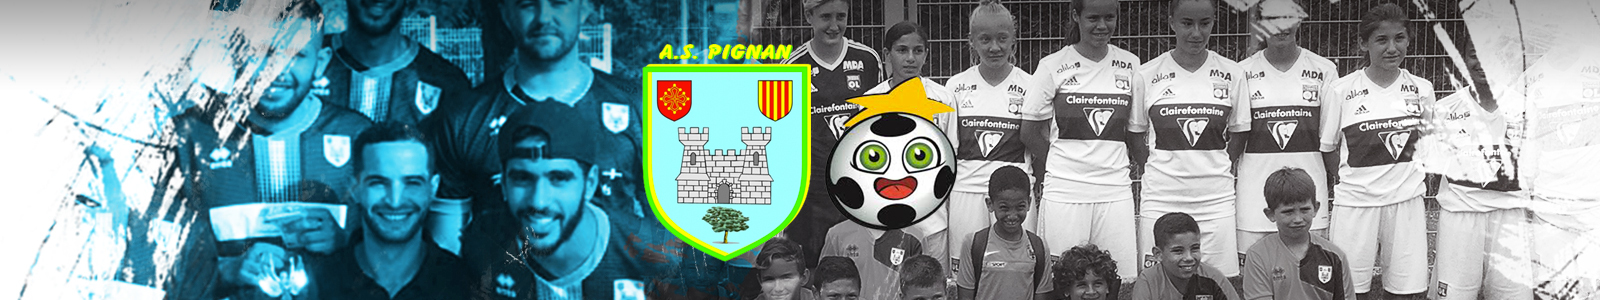 AS - PIGNAN : site officiel du club de foot de PIGNAN - footeo